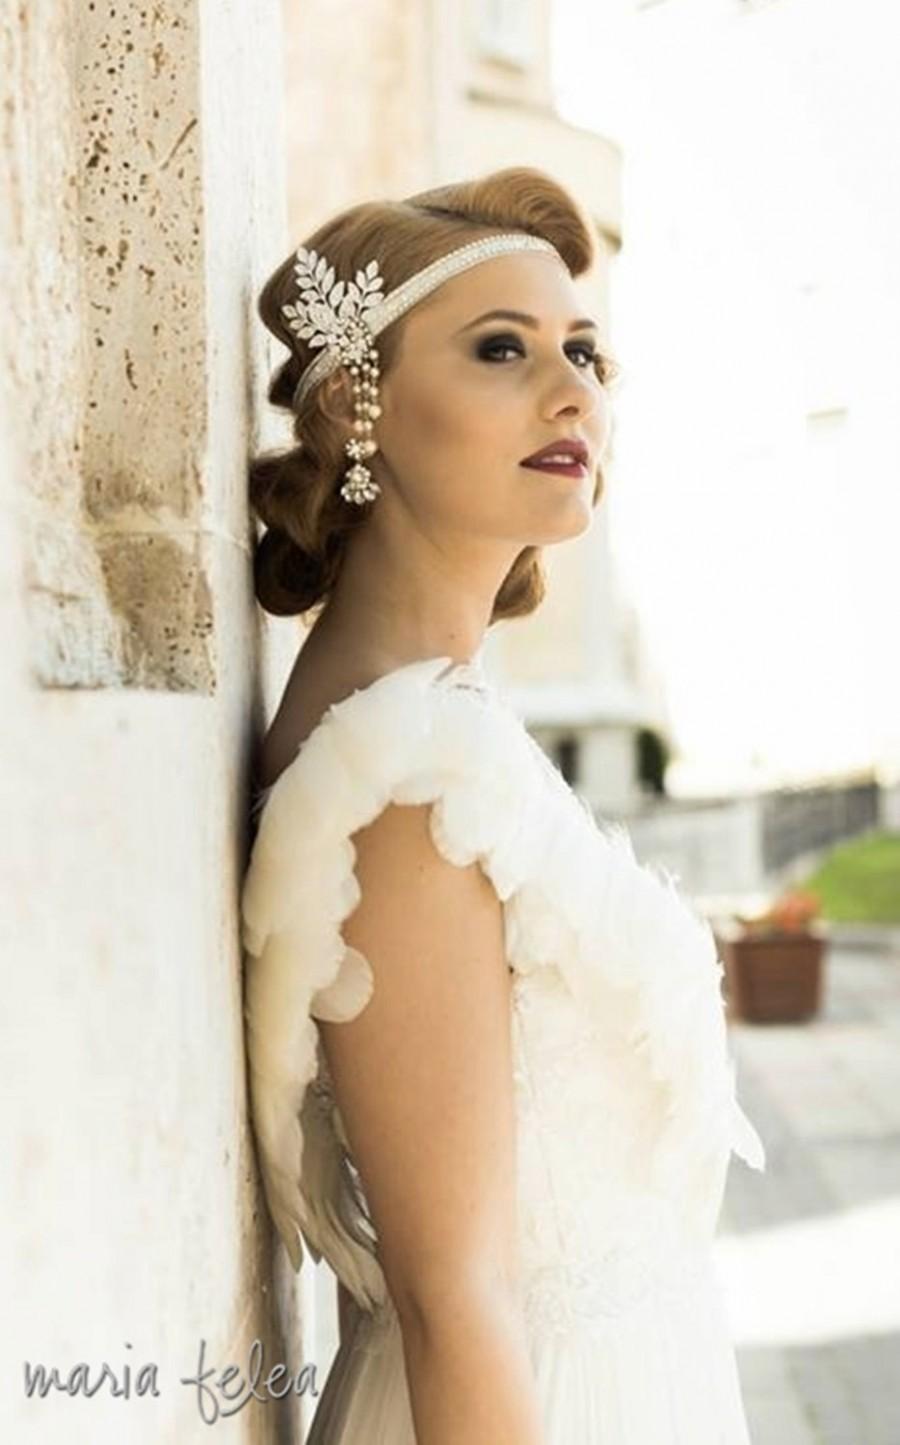 Wedding - Bridal lace headband forehead flapper Gatsby 1920's wedding headpiece flapper crown ivory lace and crystals, rhinestones, leaves headpiece